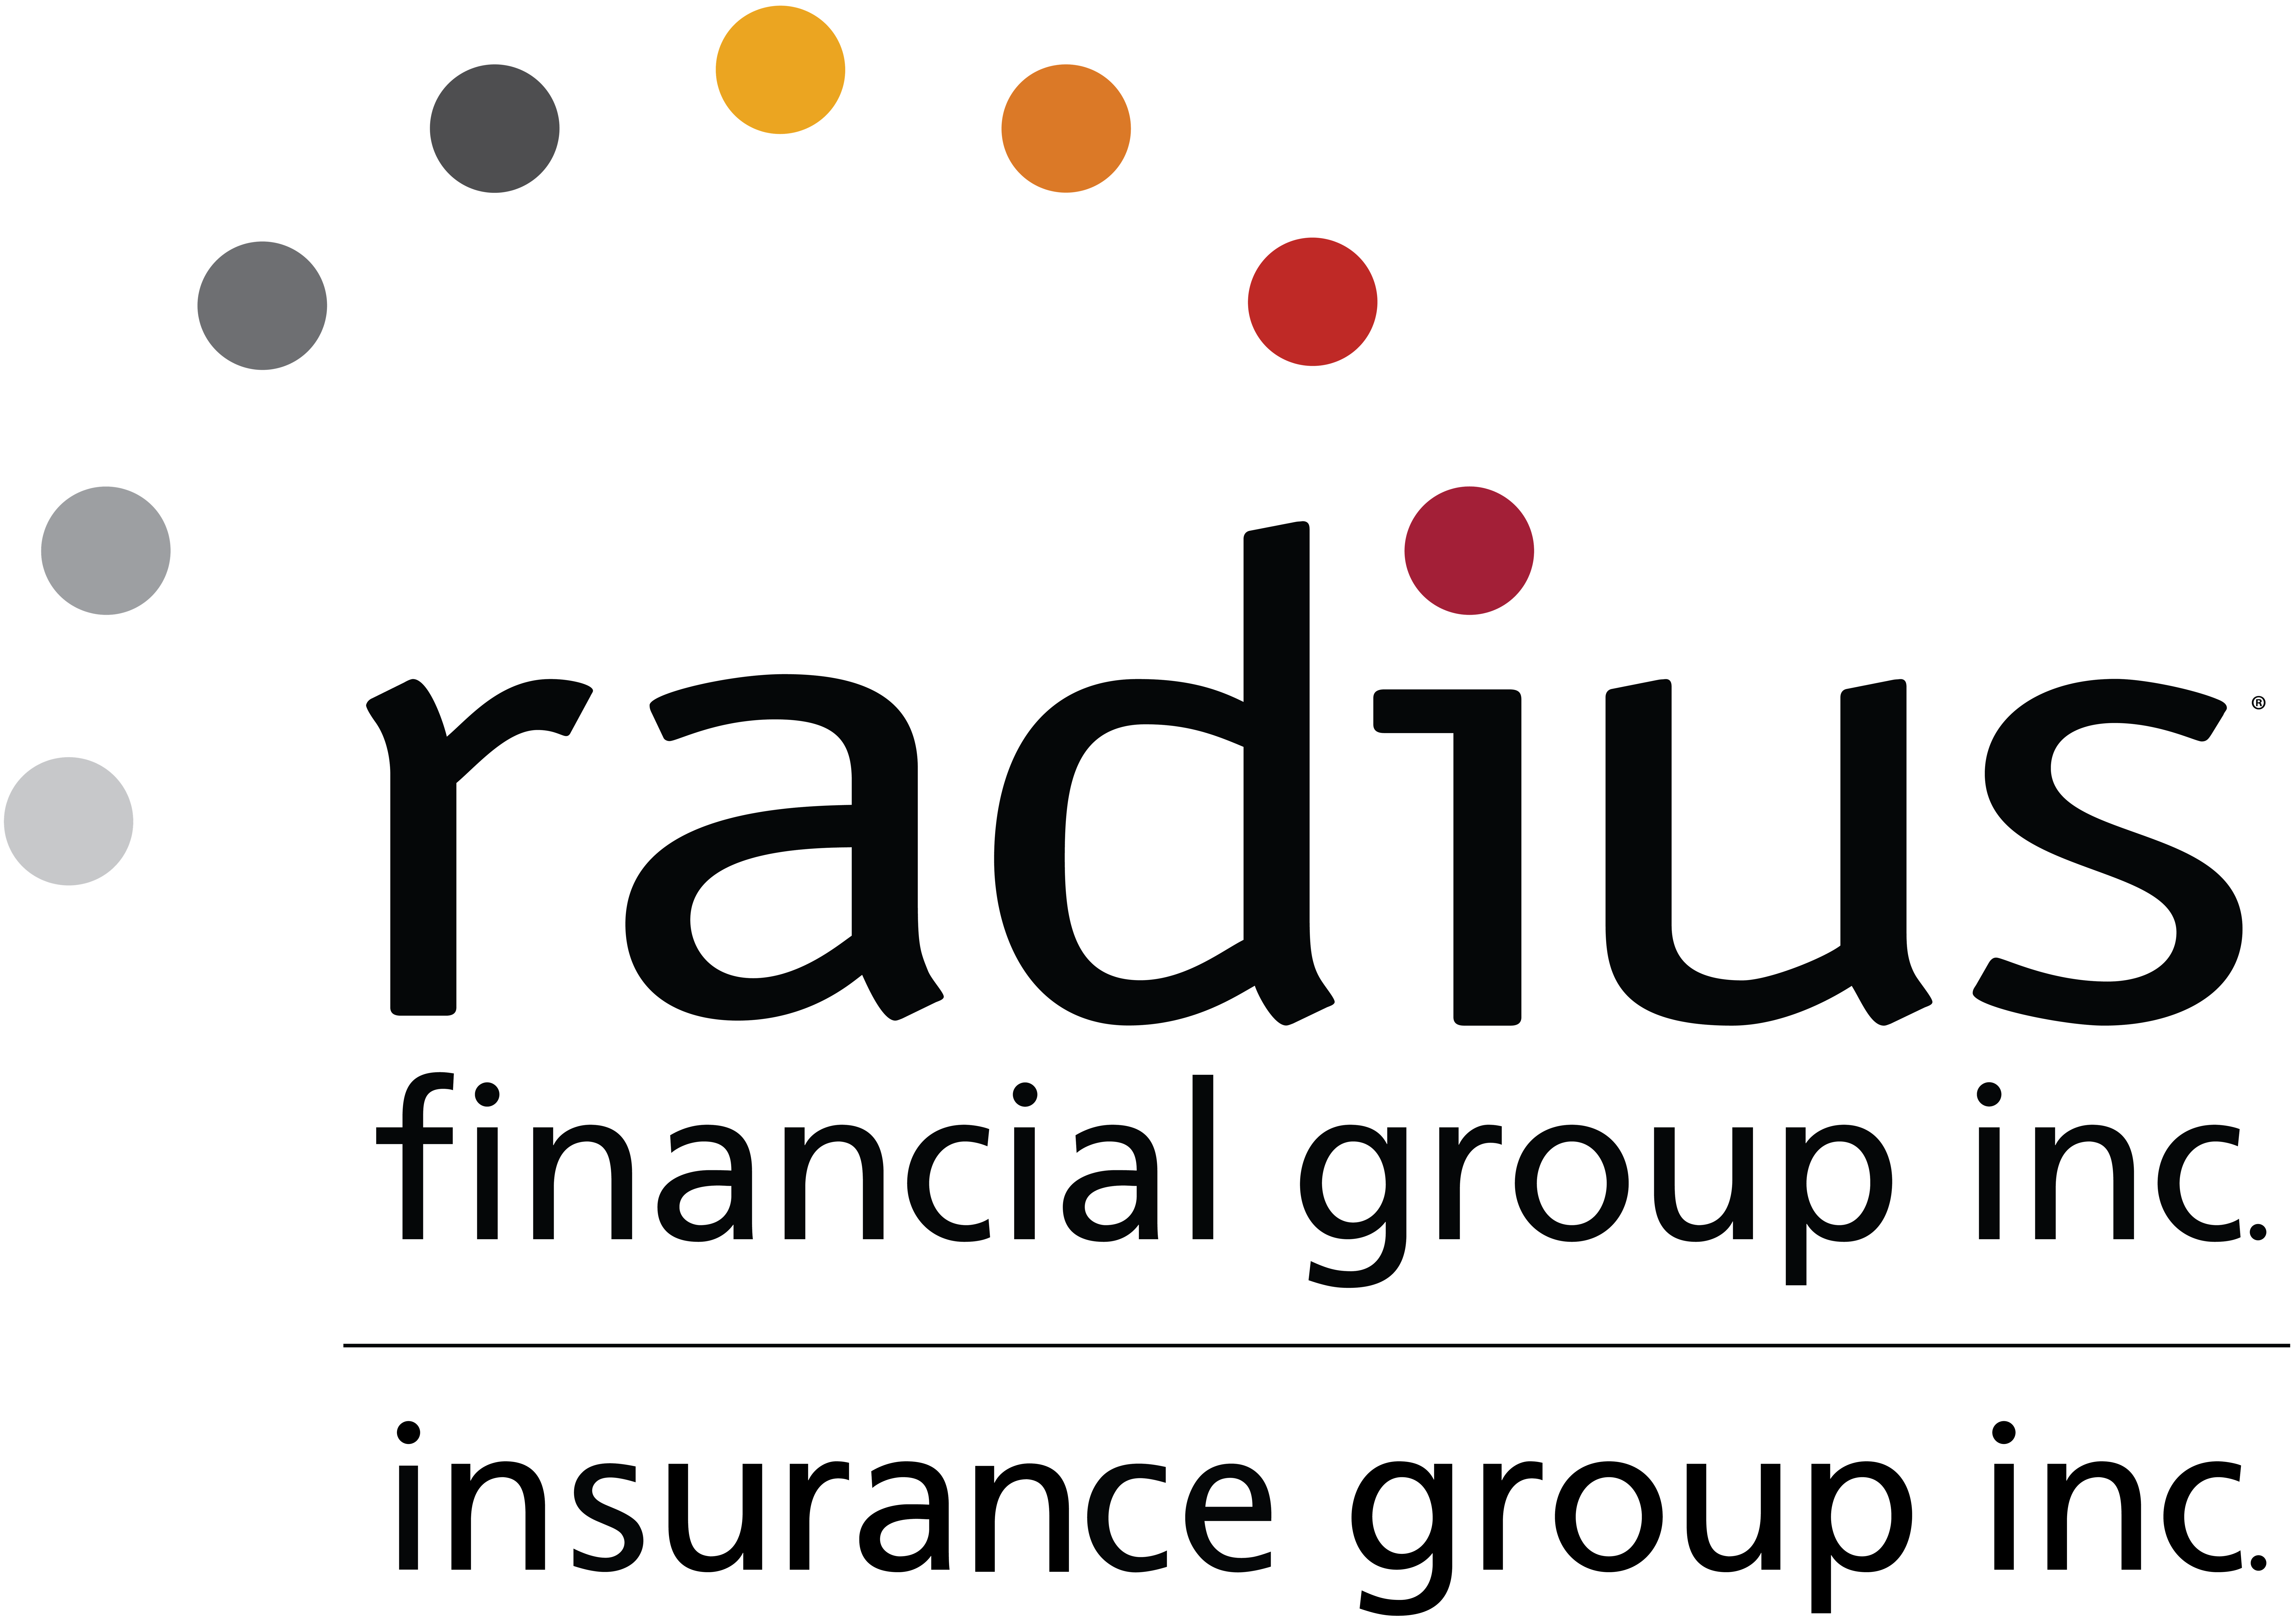 radius financial group inc. & radius insurance group inc. logo